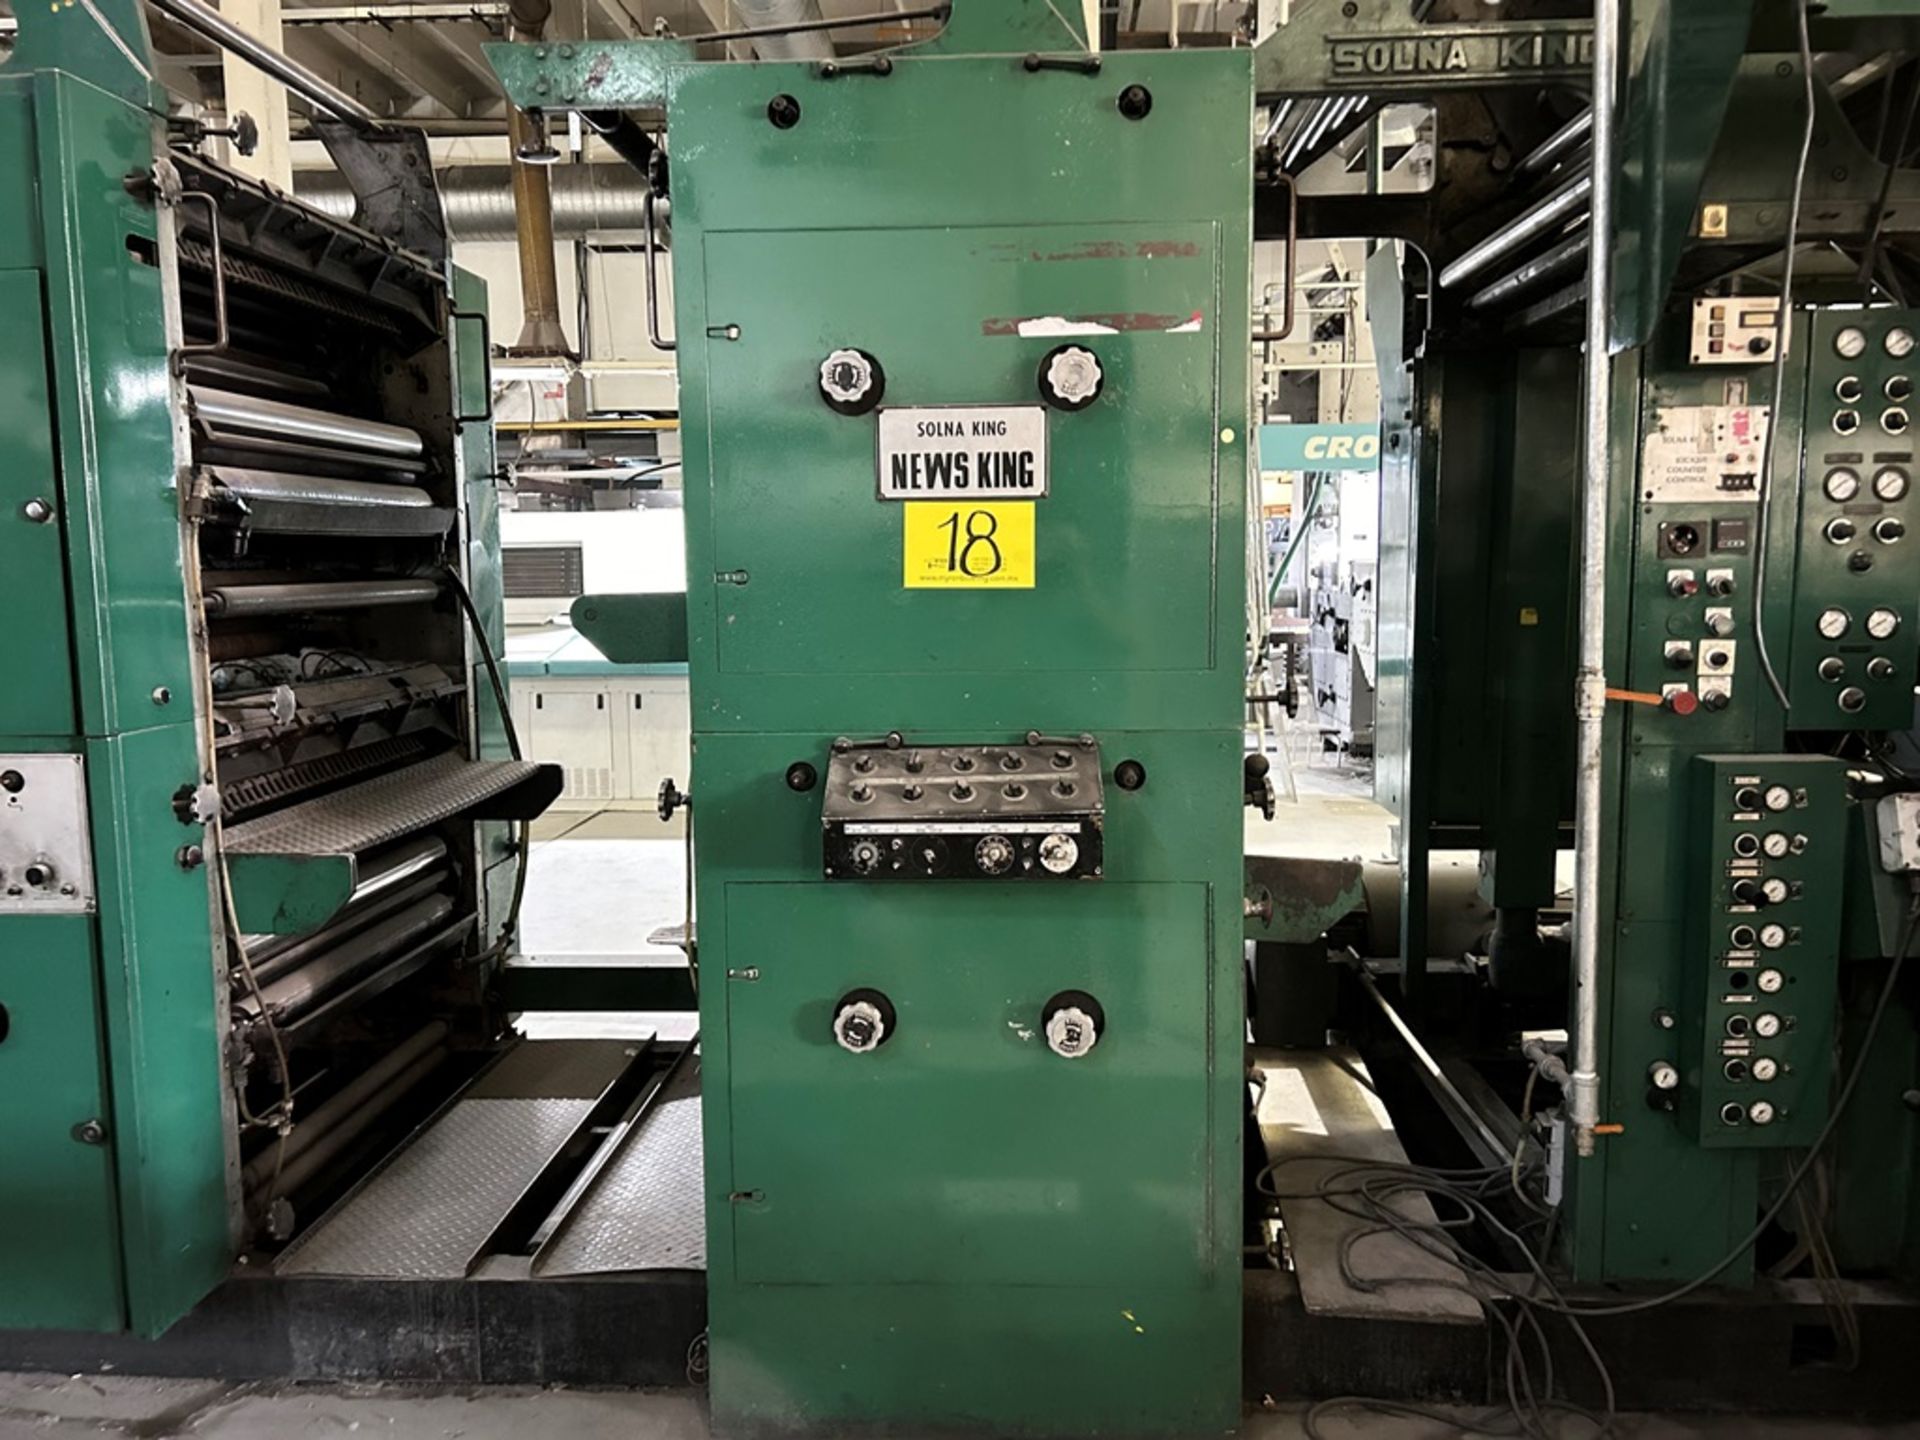 NEWS KING rotary printing machine, Model KING PRESS KJ8, Serial No. P2680-1.F21C2-9-89 CM-1000, Yea - Image 3 of 14